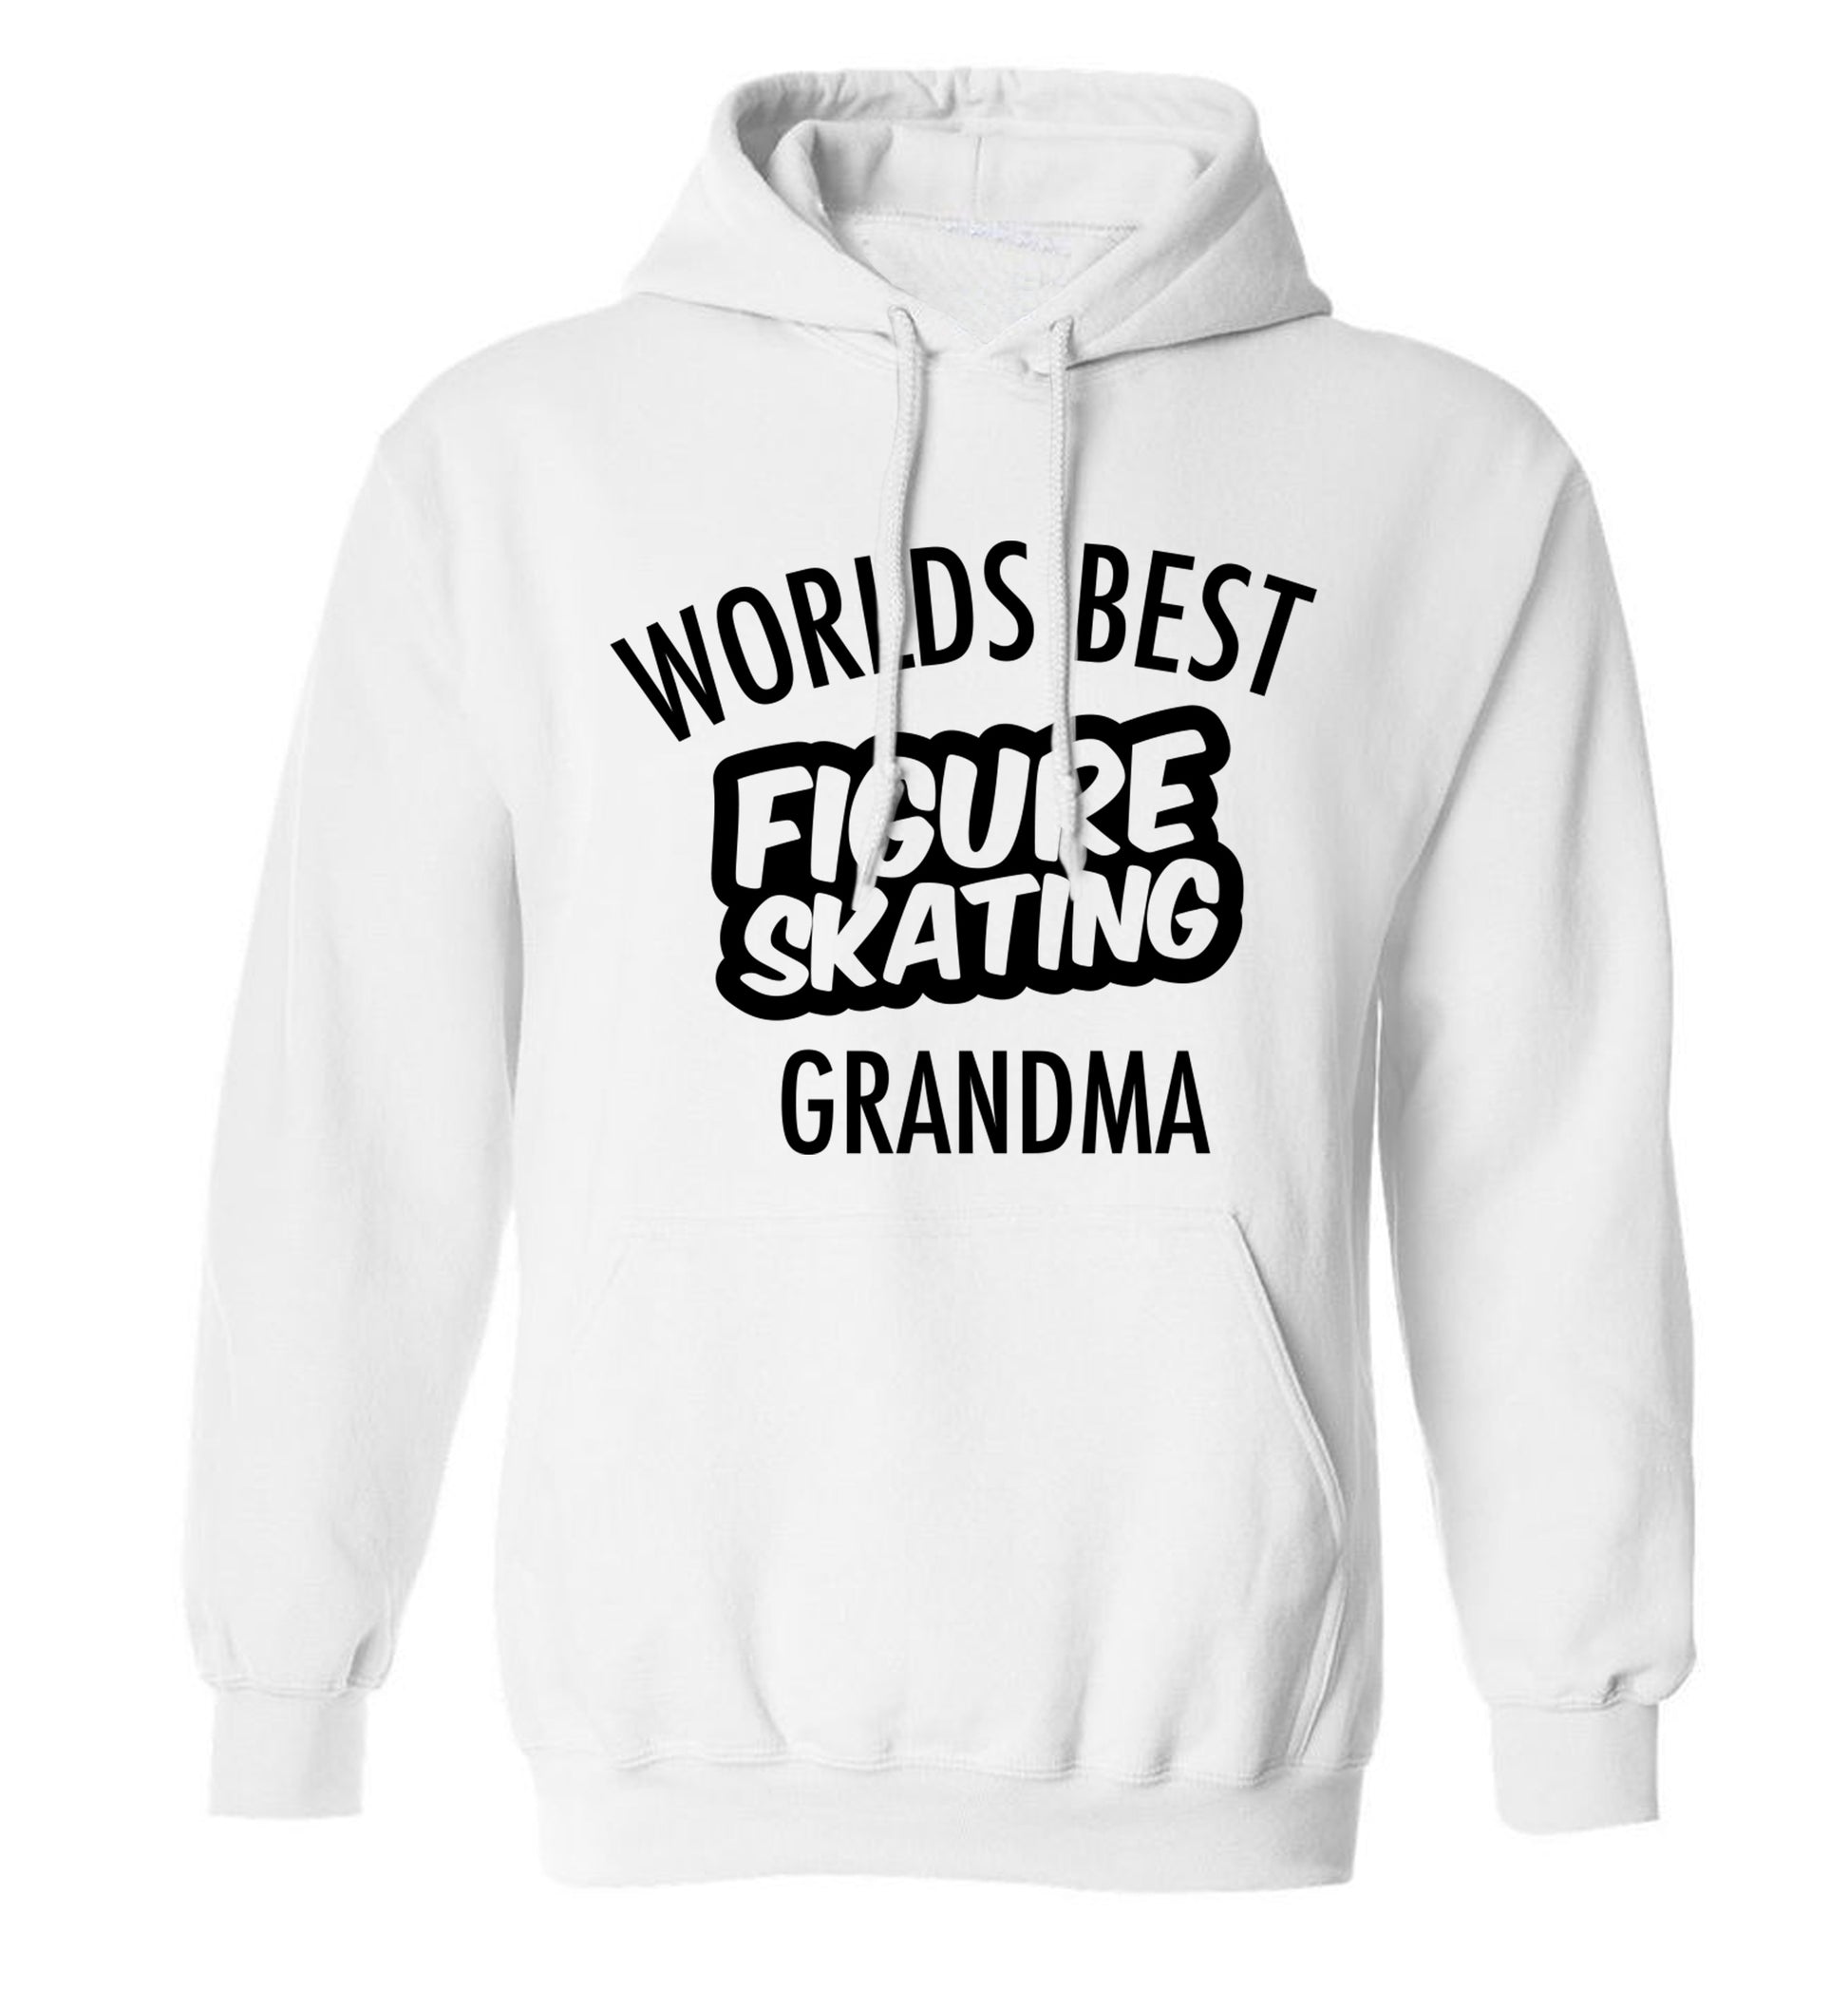 Worlds best figure skating grandma adults unisexwhite hoodie 2XL